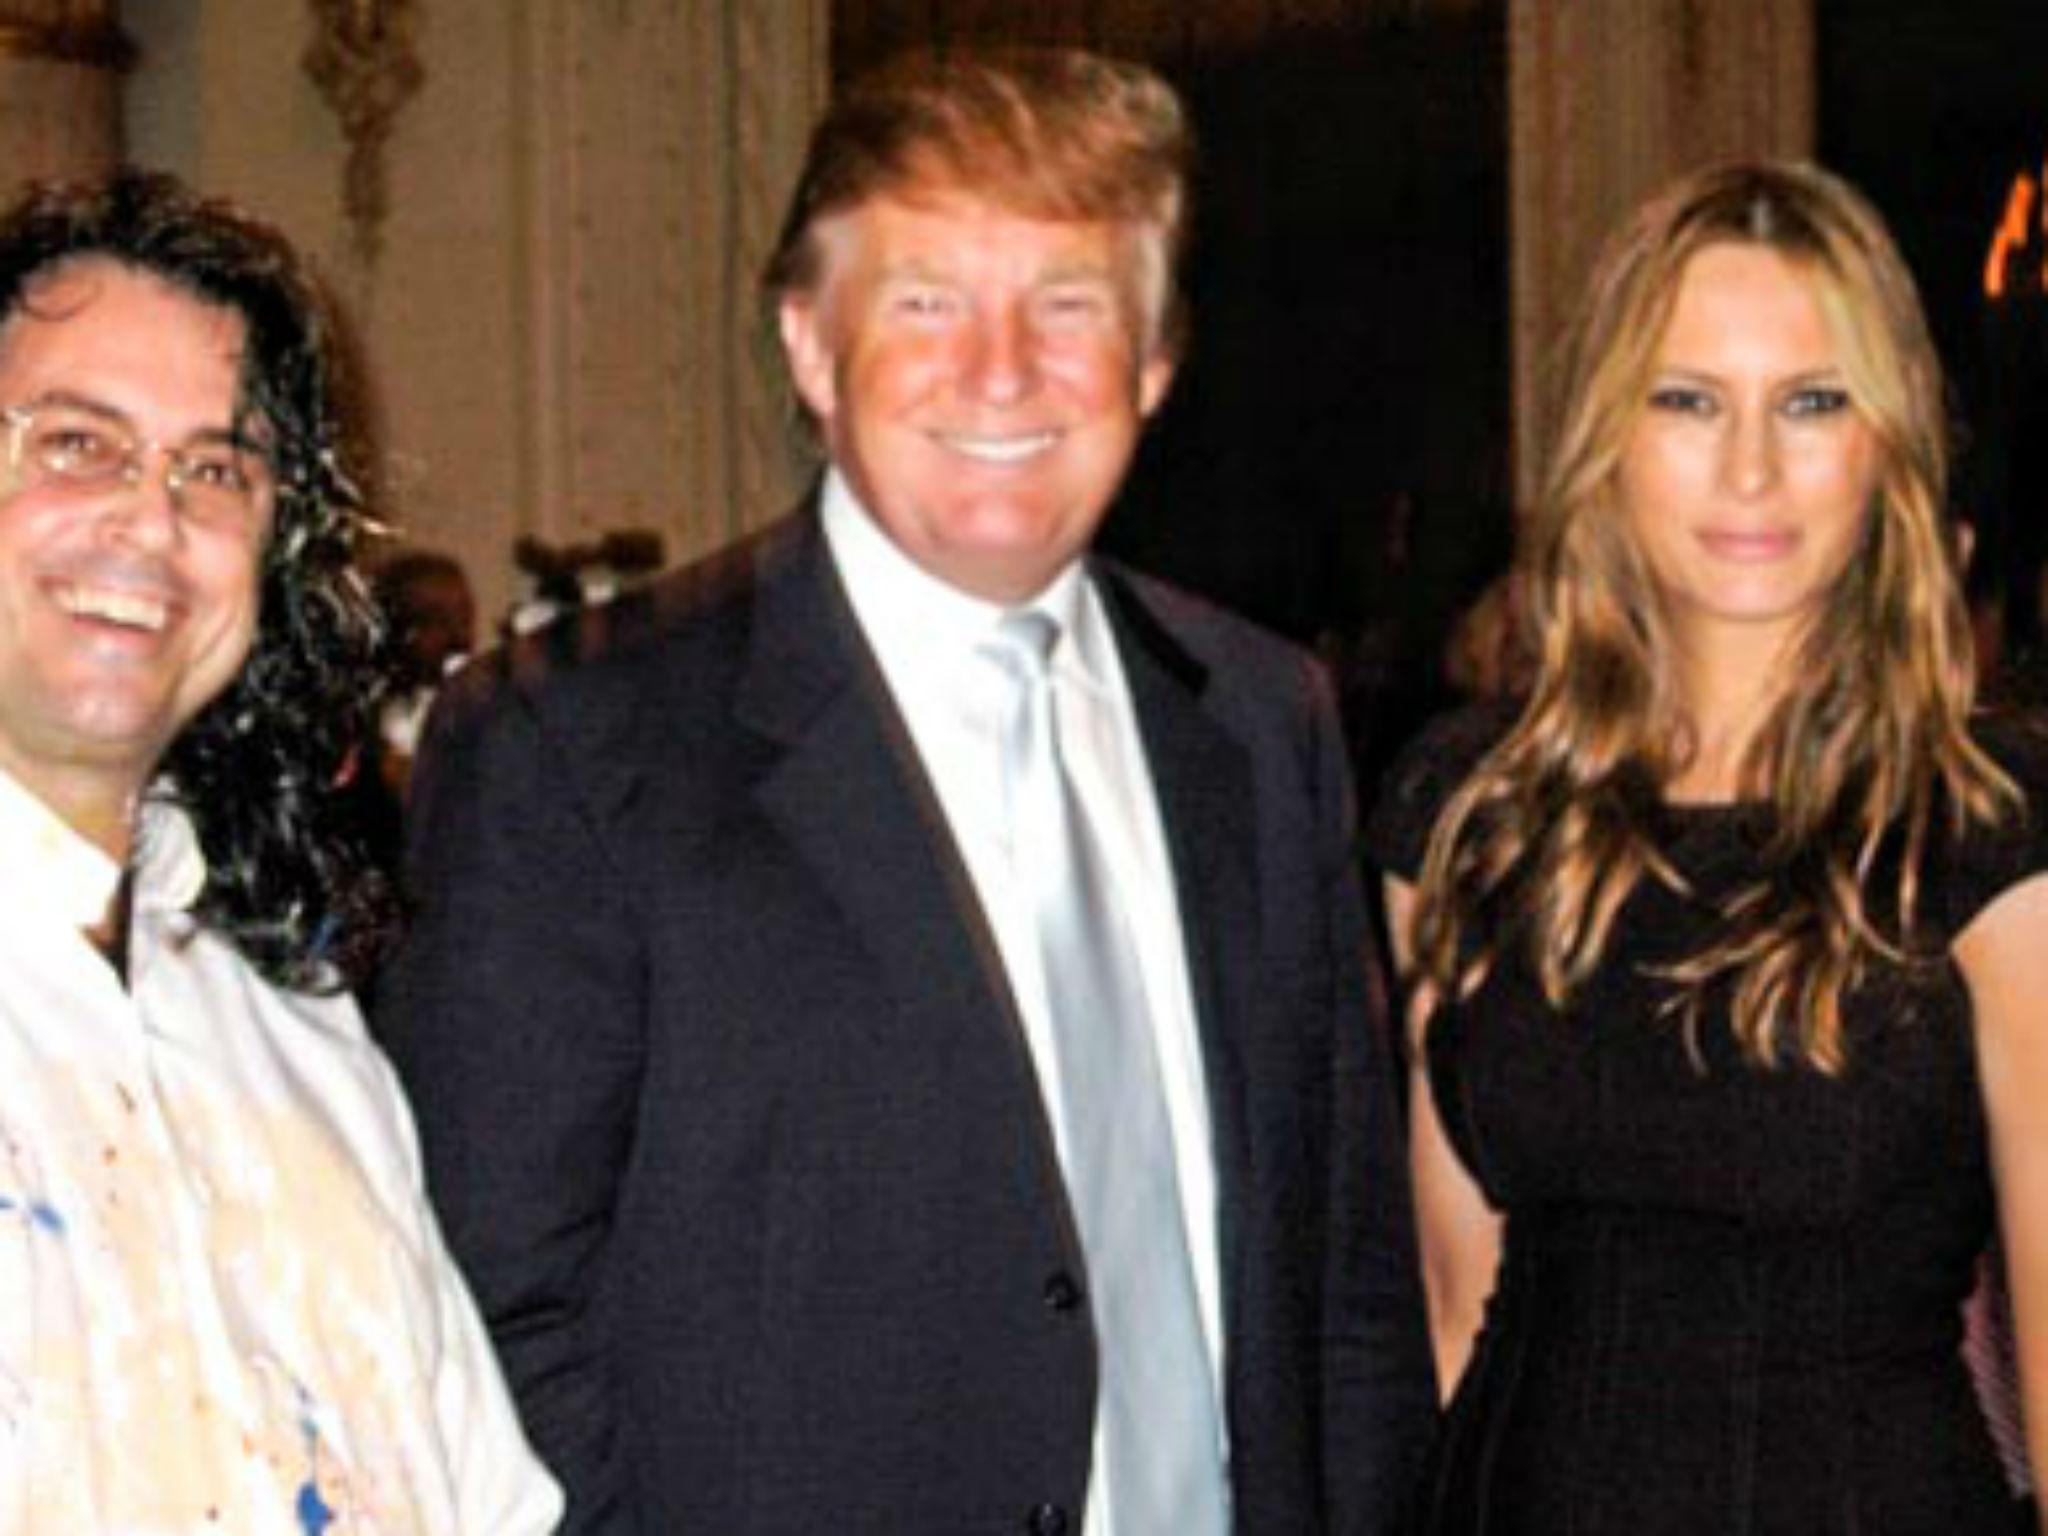 &#13;
Michael Israel beside Donald and Melania Trump in 2007 &#13;